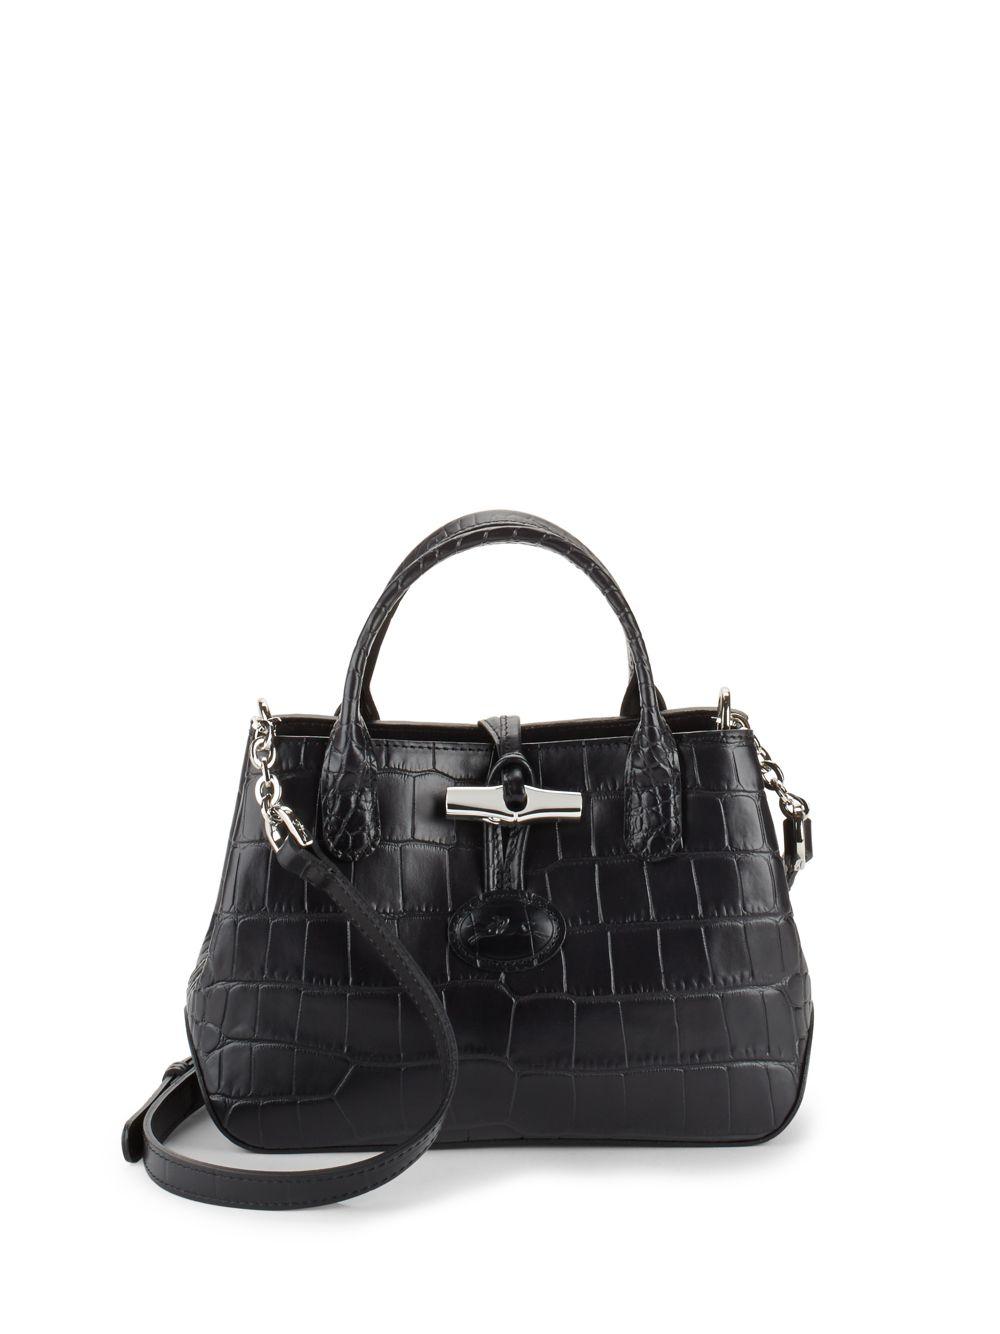 Longchamp Roseau Croco Crossbody Bag in Black | Lyst